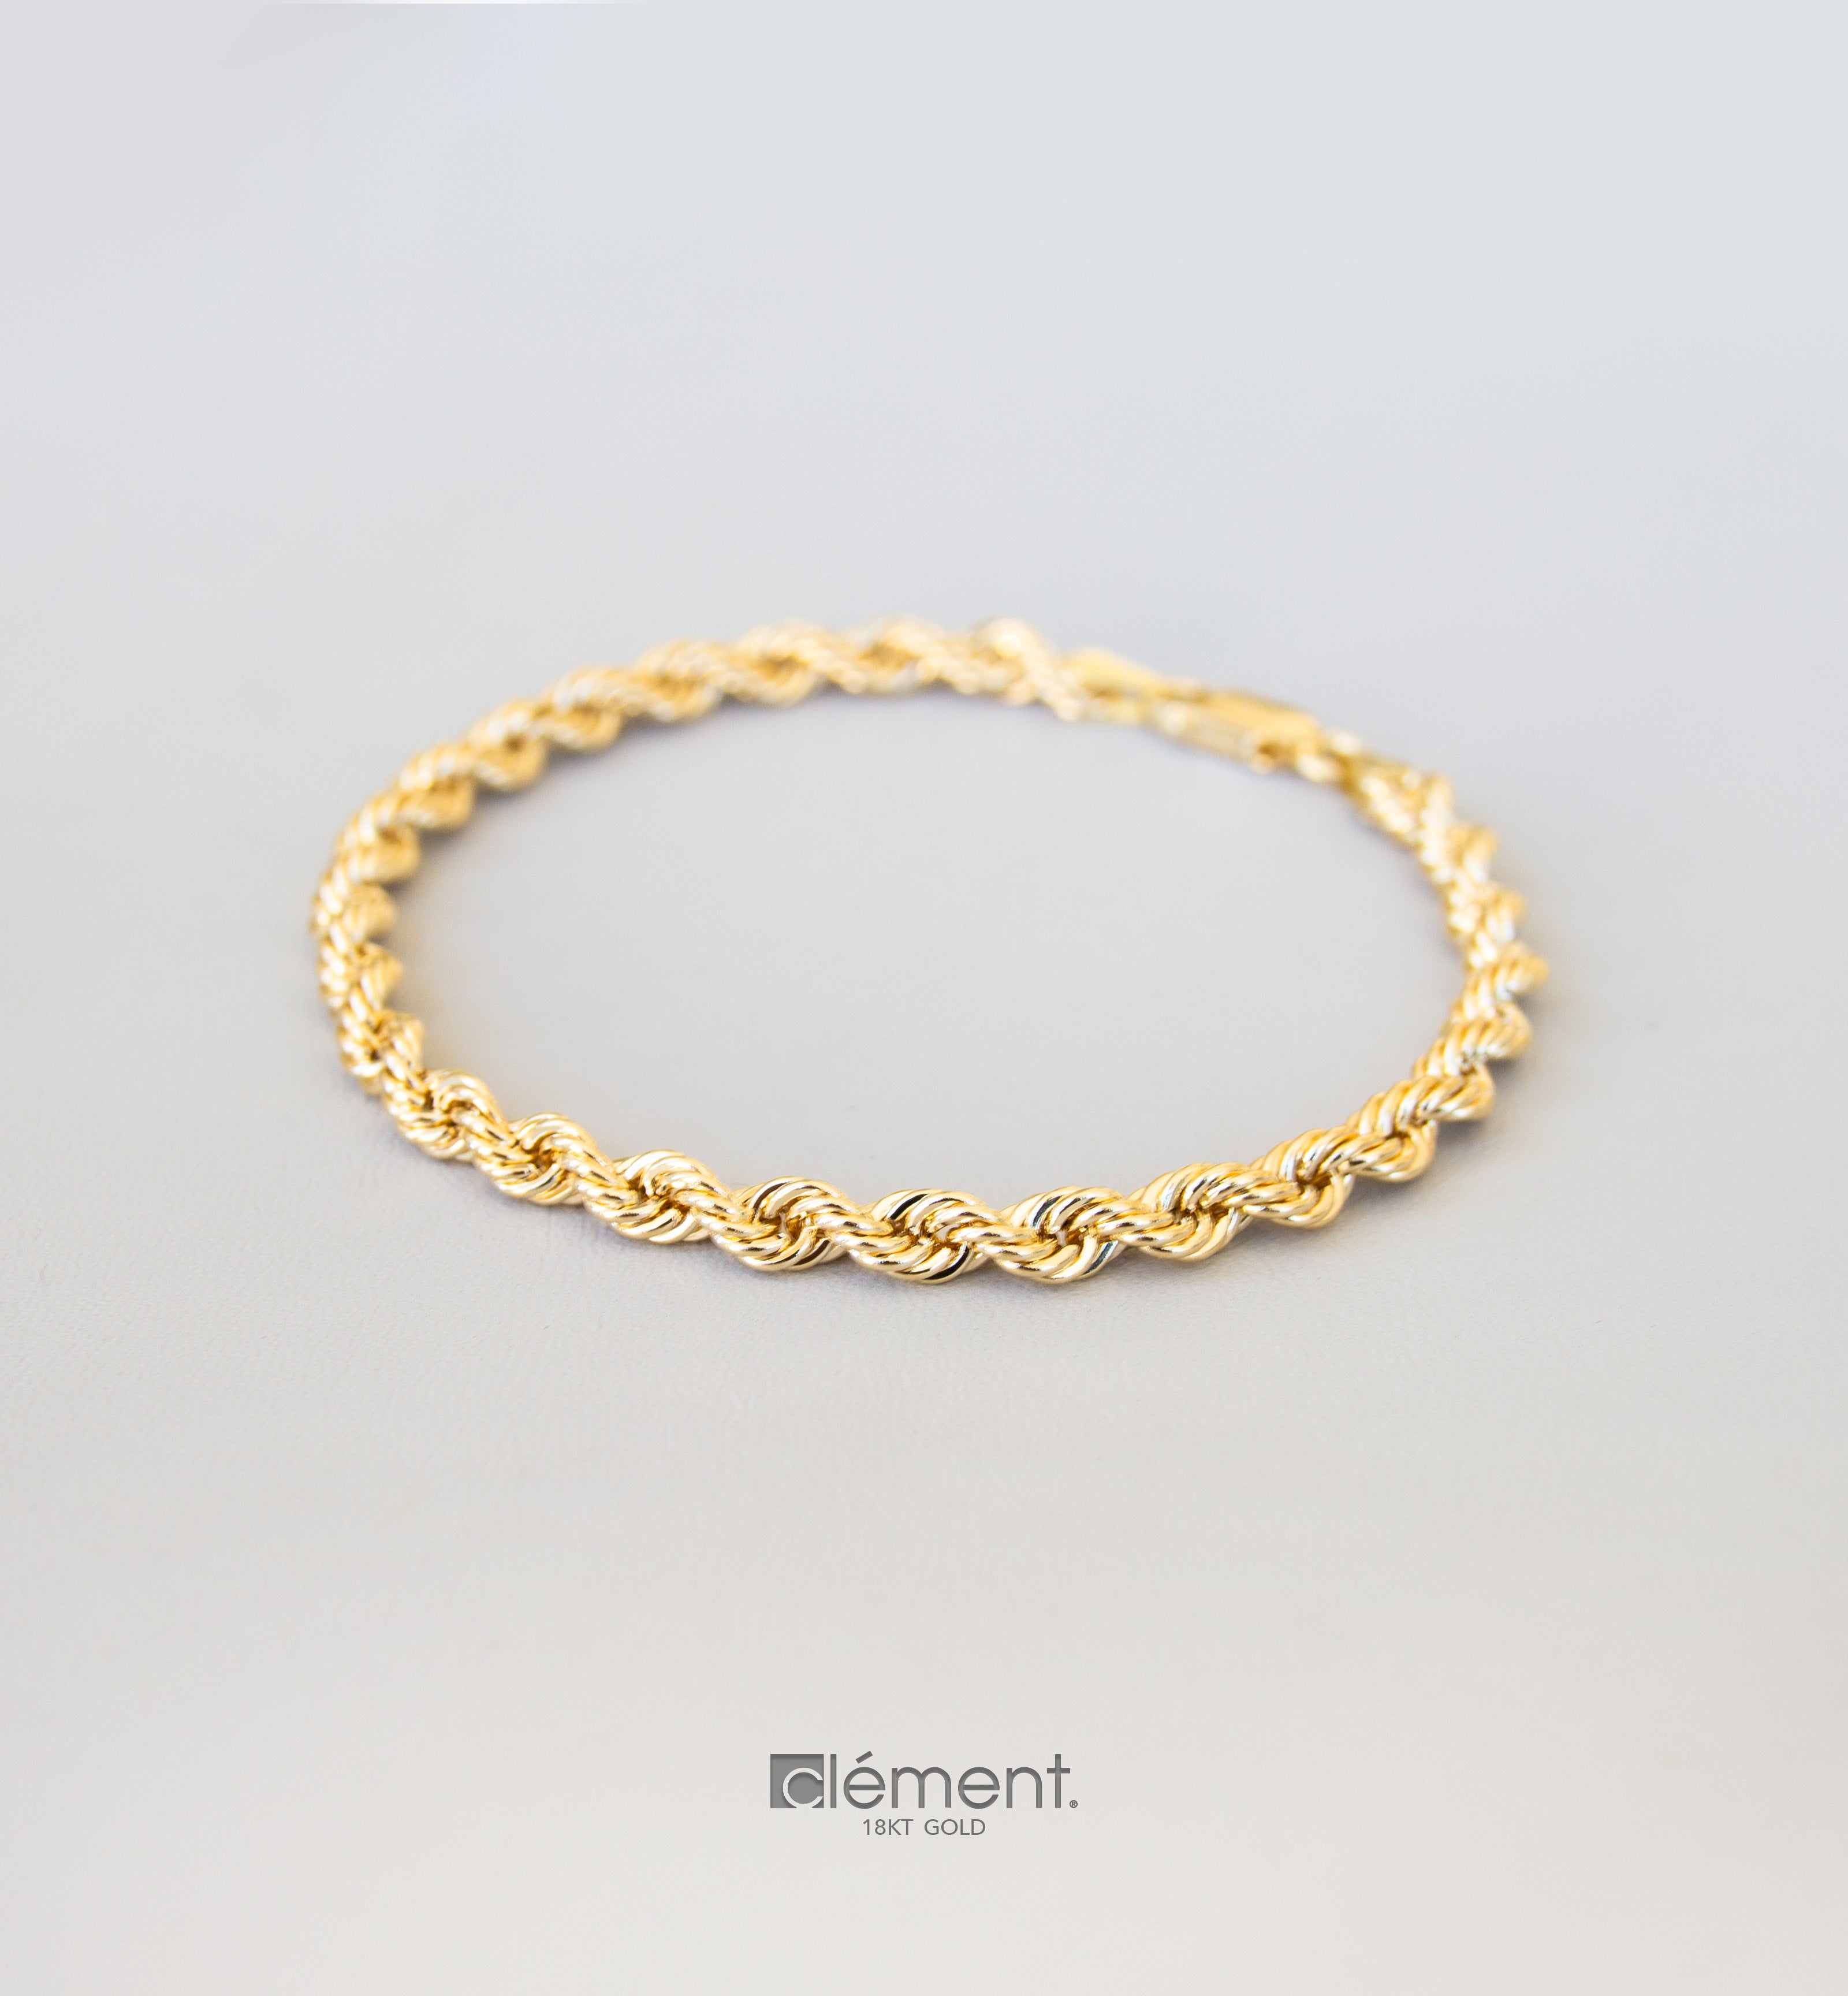 Lab Grown Diamond Bracelet 18kt White Gold Bracelet Diamond 3.12 Carat Gold  Jewelry for Women at Rs 119999 | Diamond Bracelets in Gurugram | ID:  2852904327188